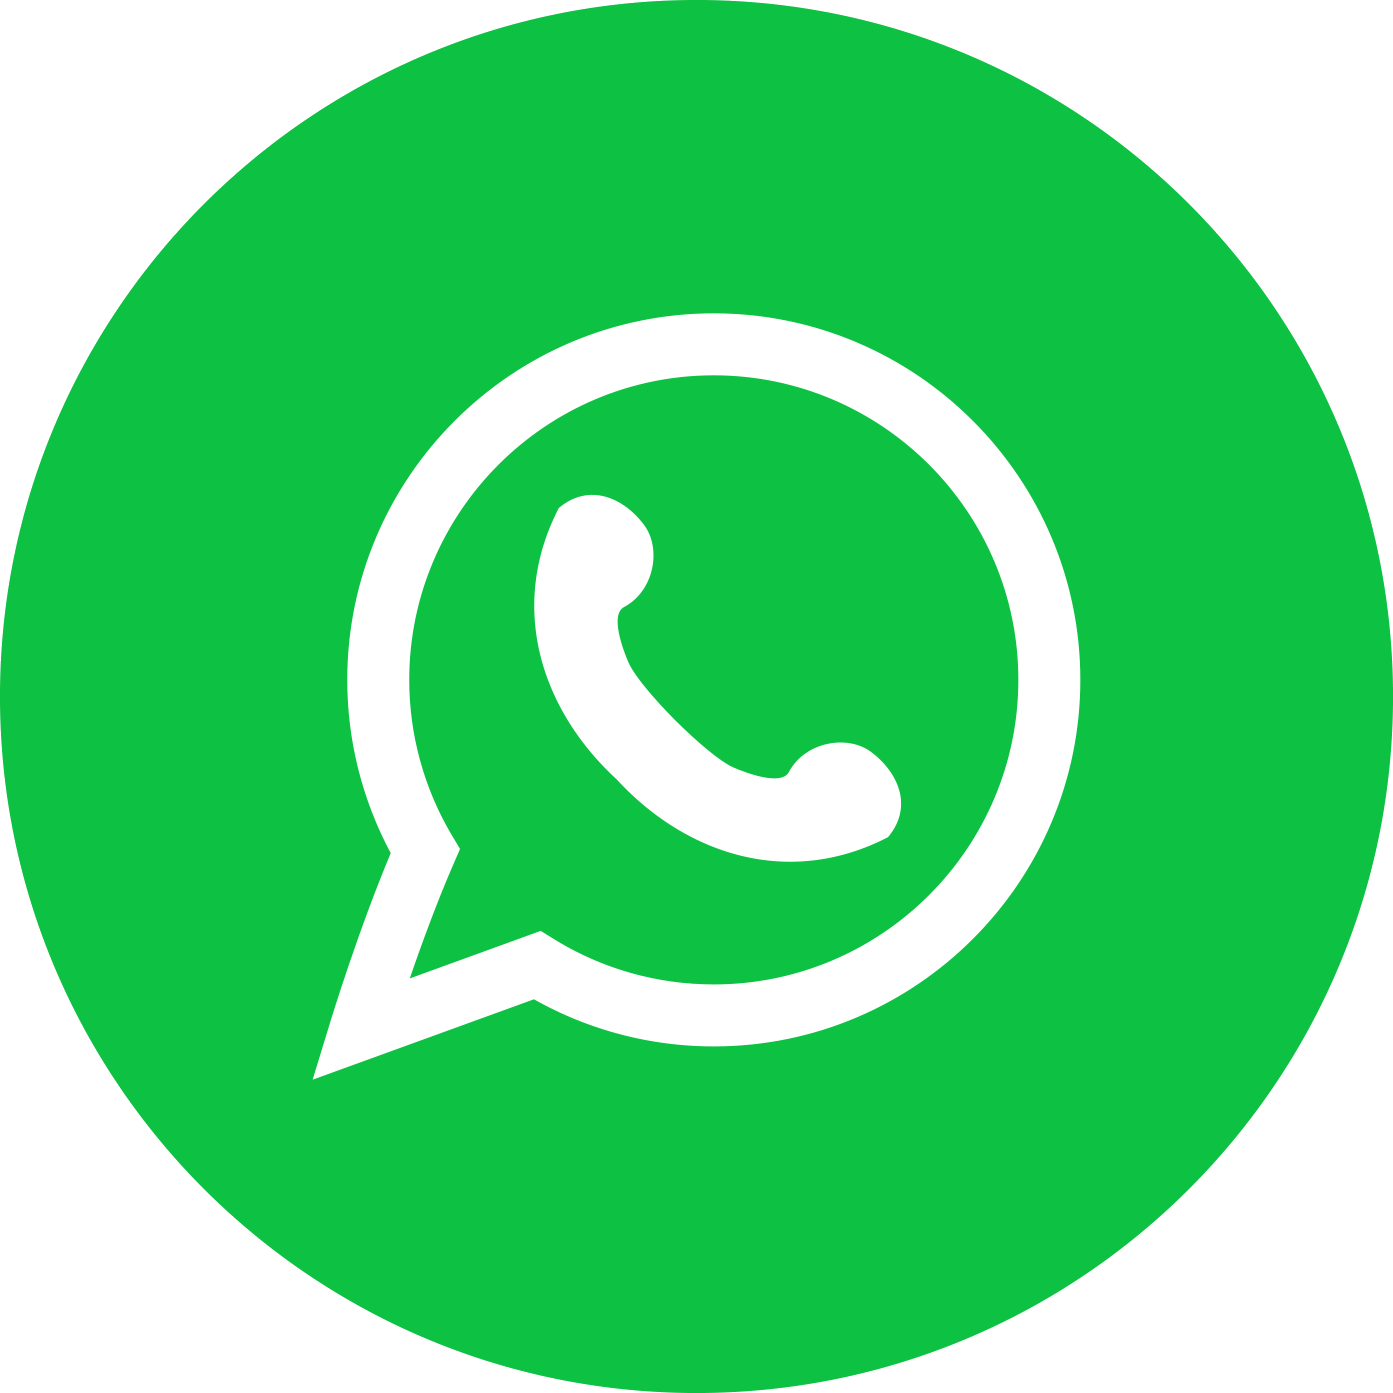 Enviar Mensagem via WhatsApp.